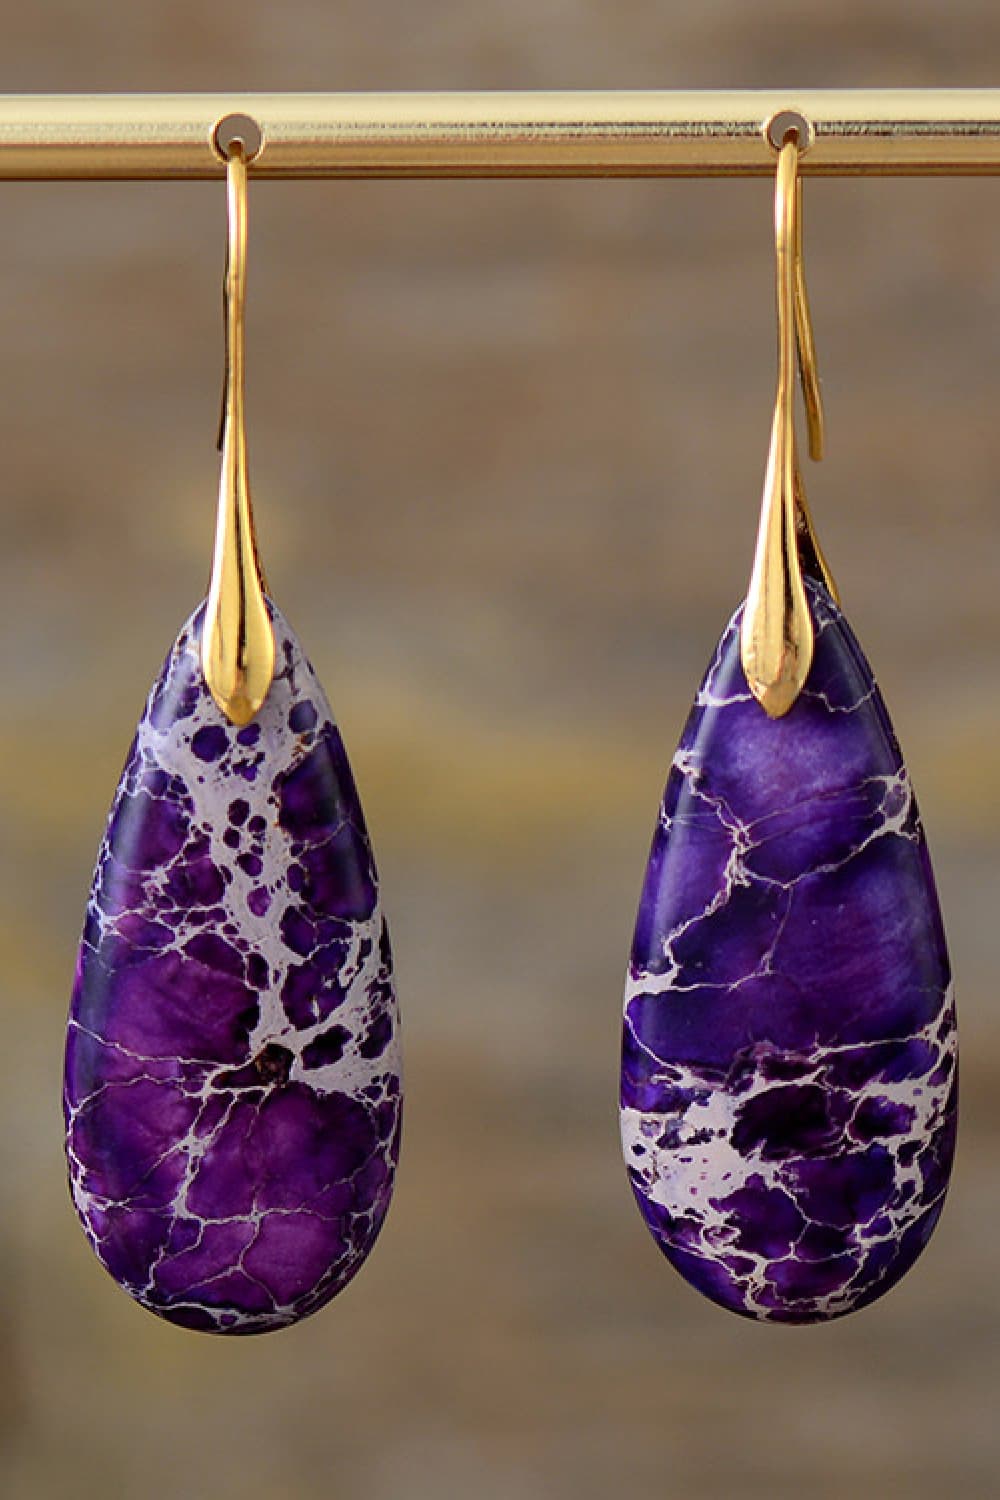 Handmade Teardrop Shape Natural Stone Dangle Earrings Available in Multiple Colors